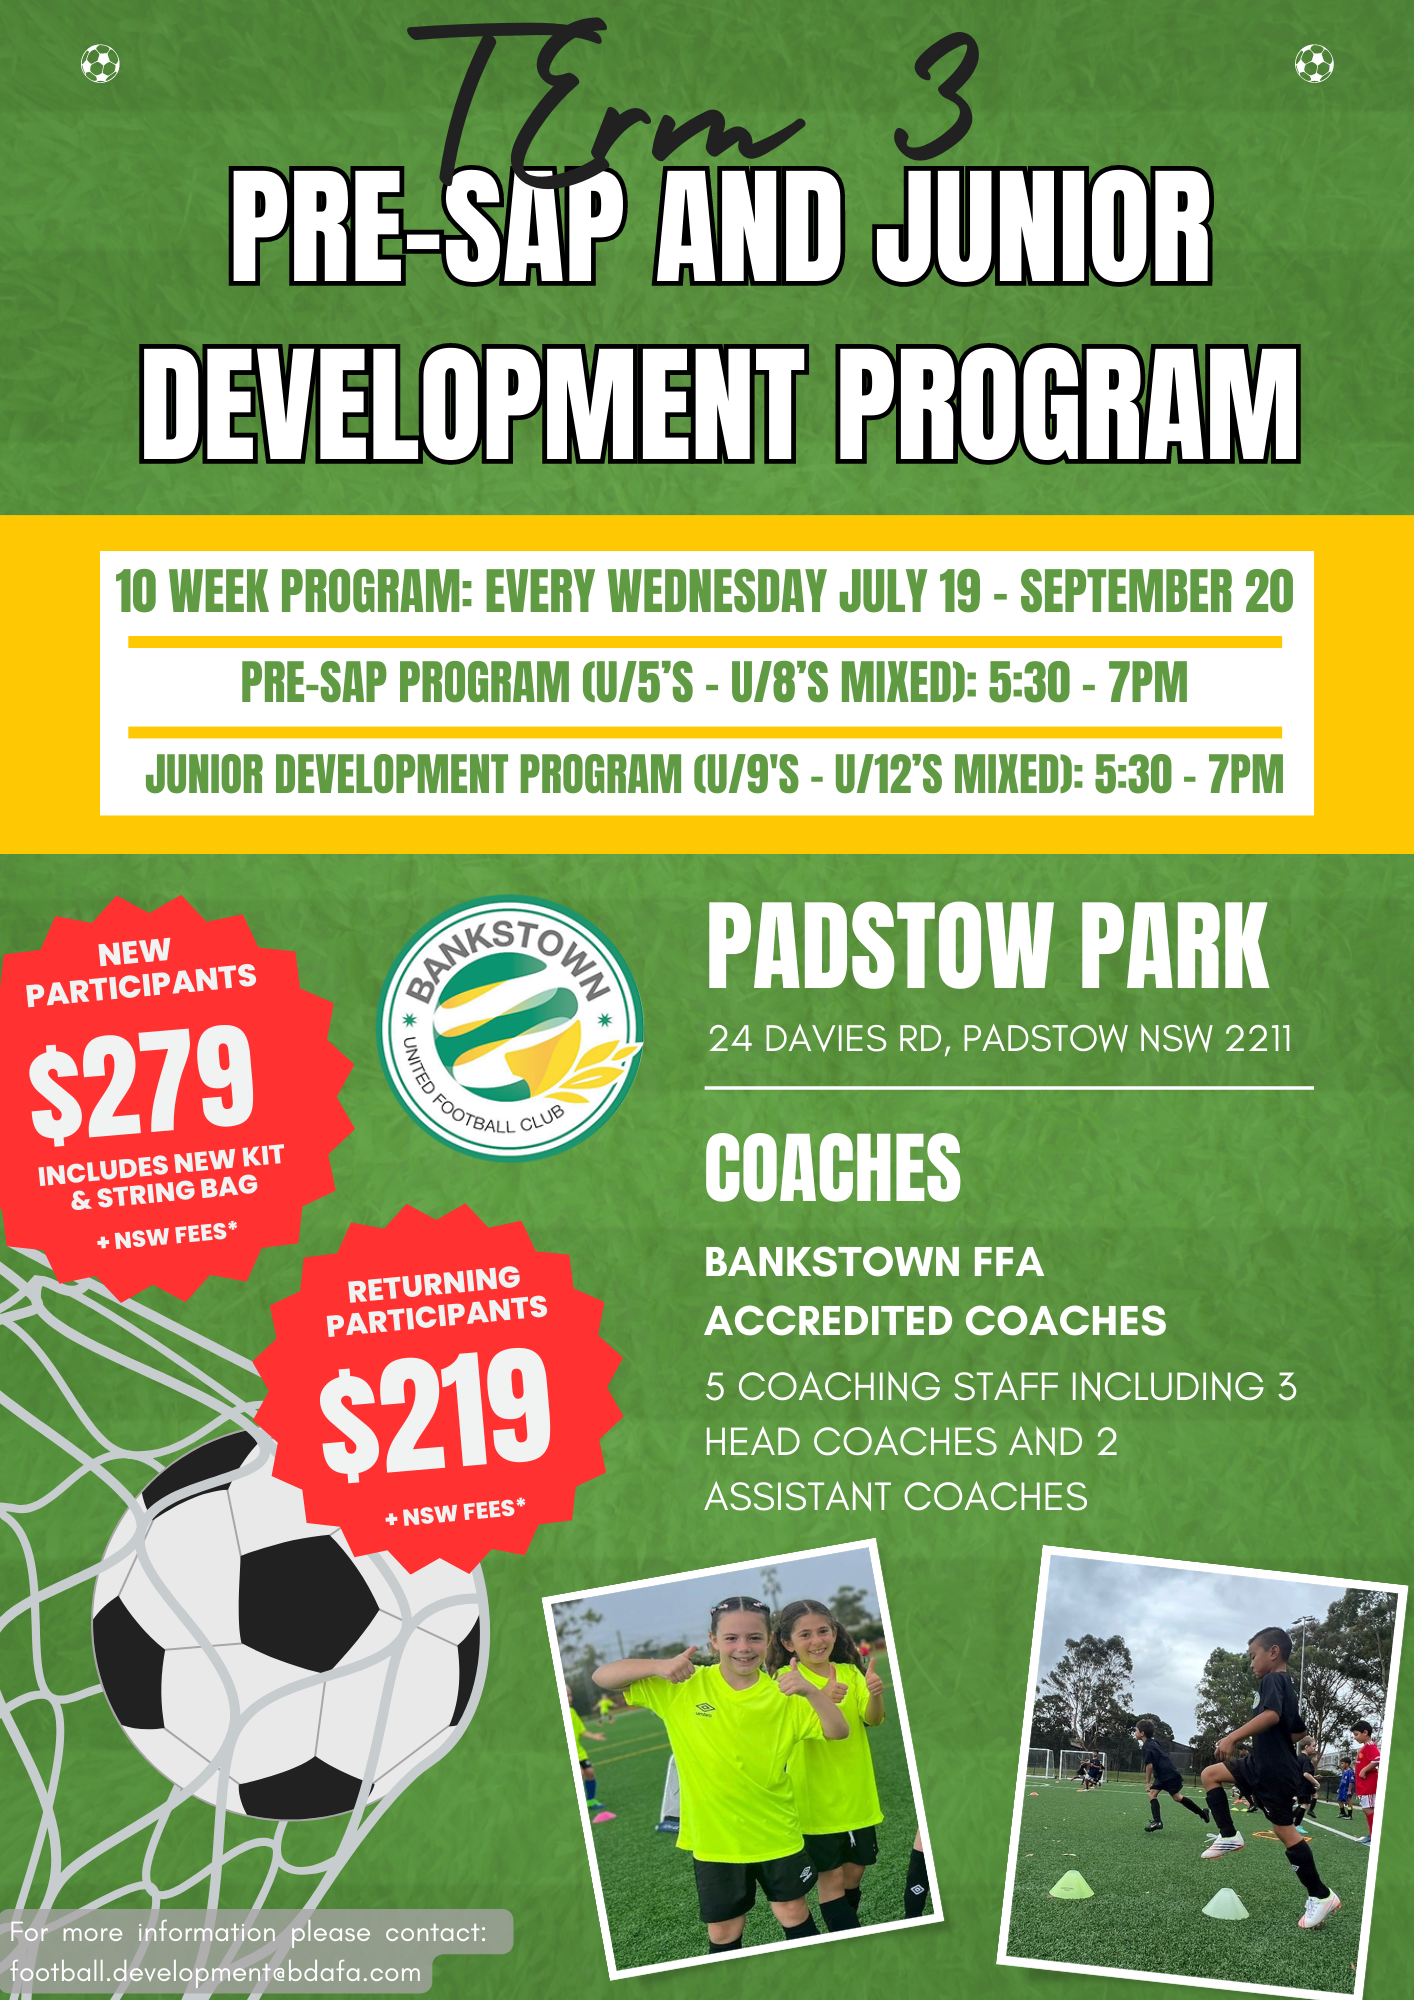 Development Program Flyer